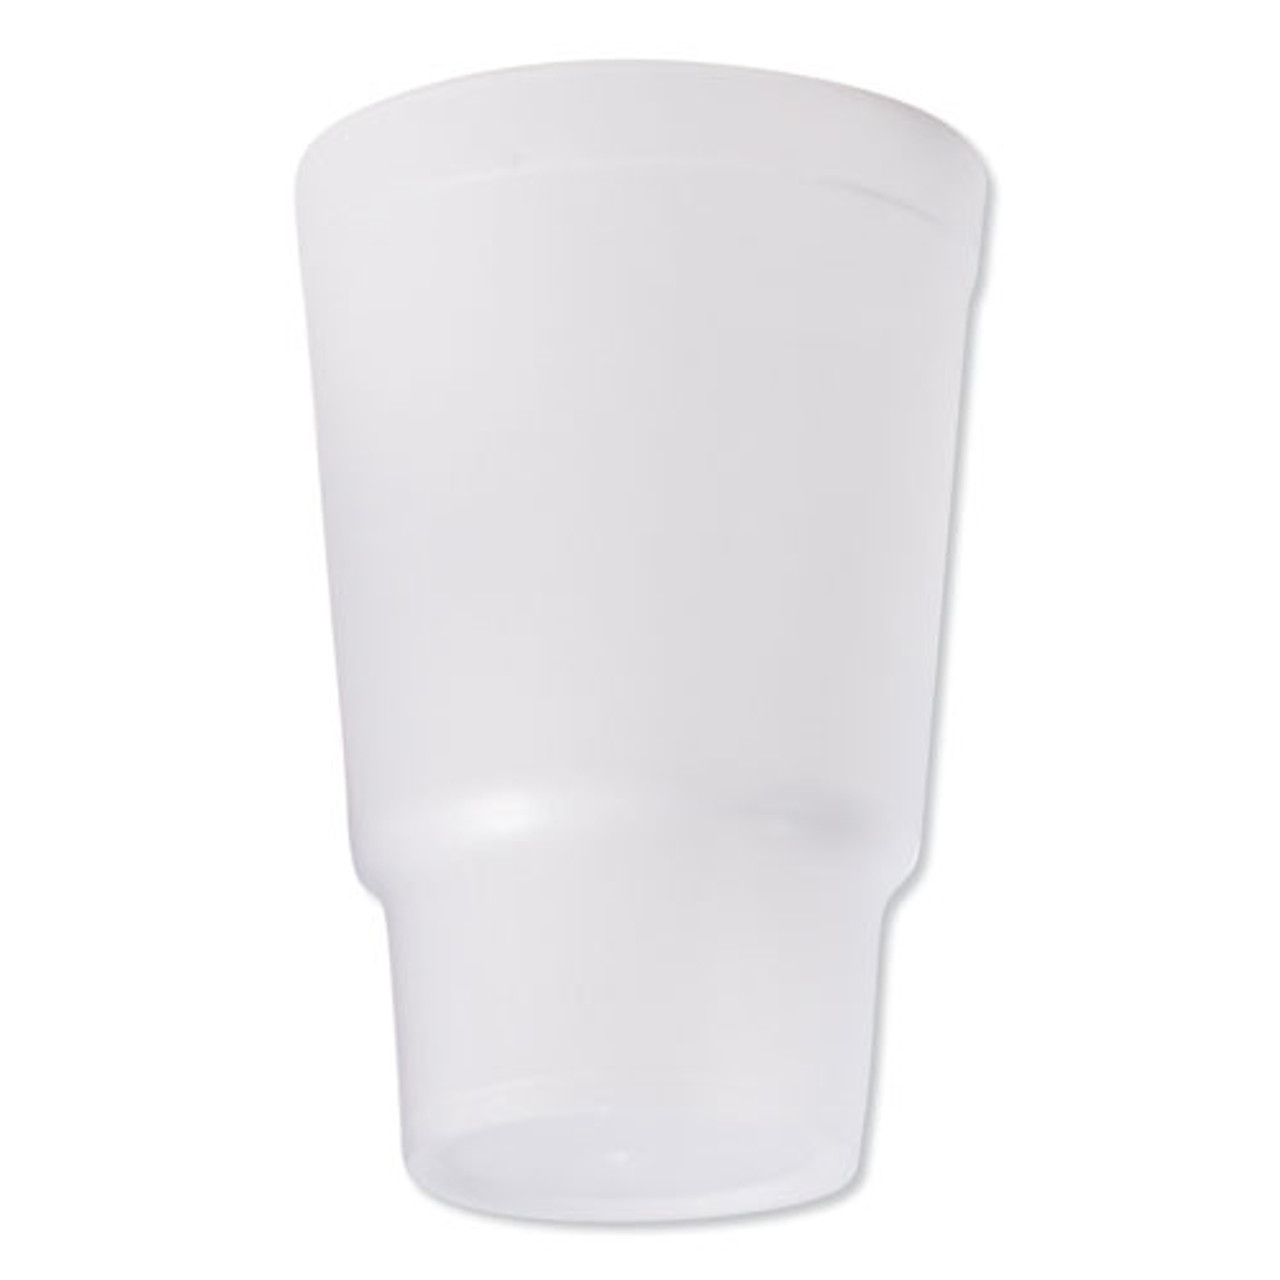 Dart Foam Drink Cups, 20 oz, White, 25/Bag, 20 Bags/Carton